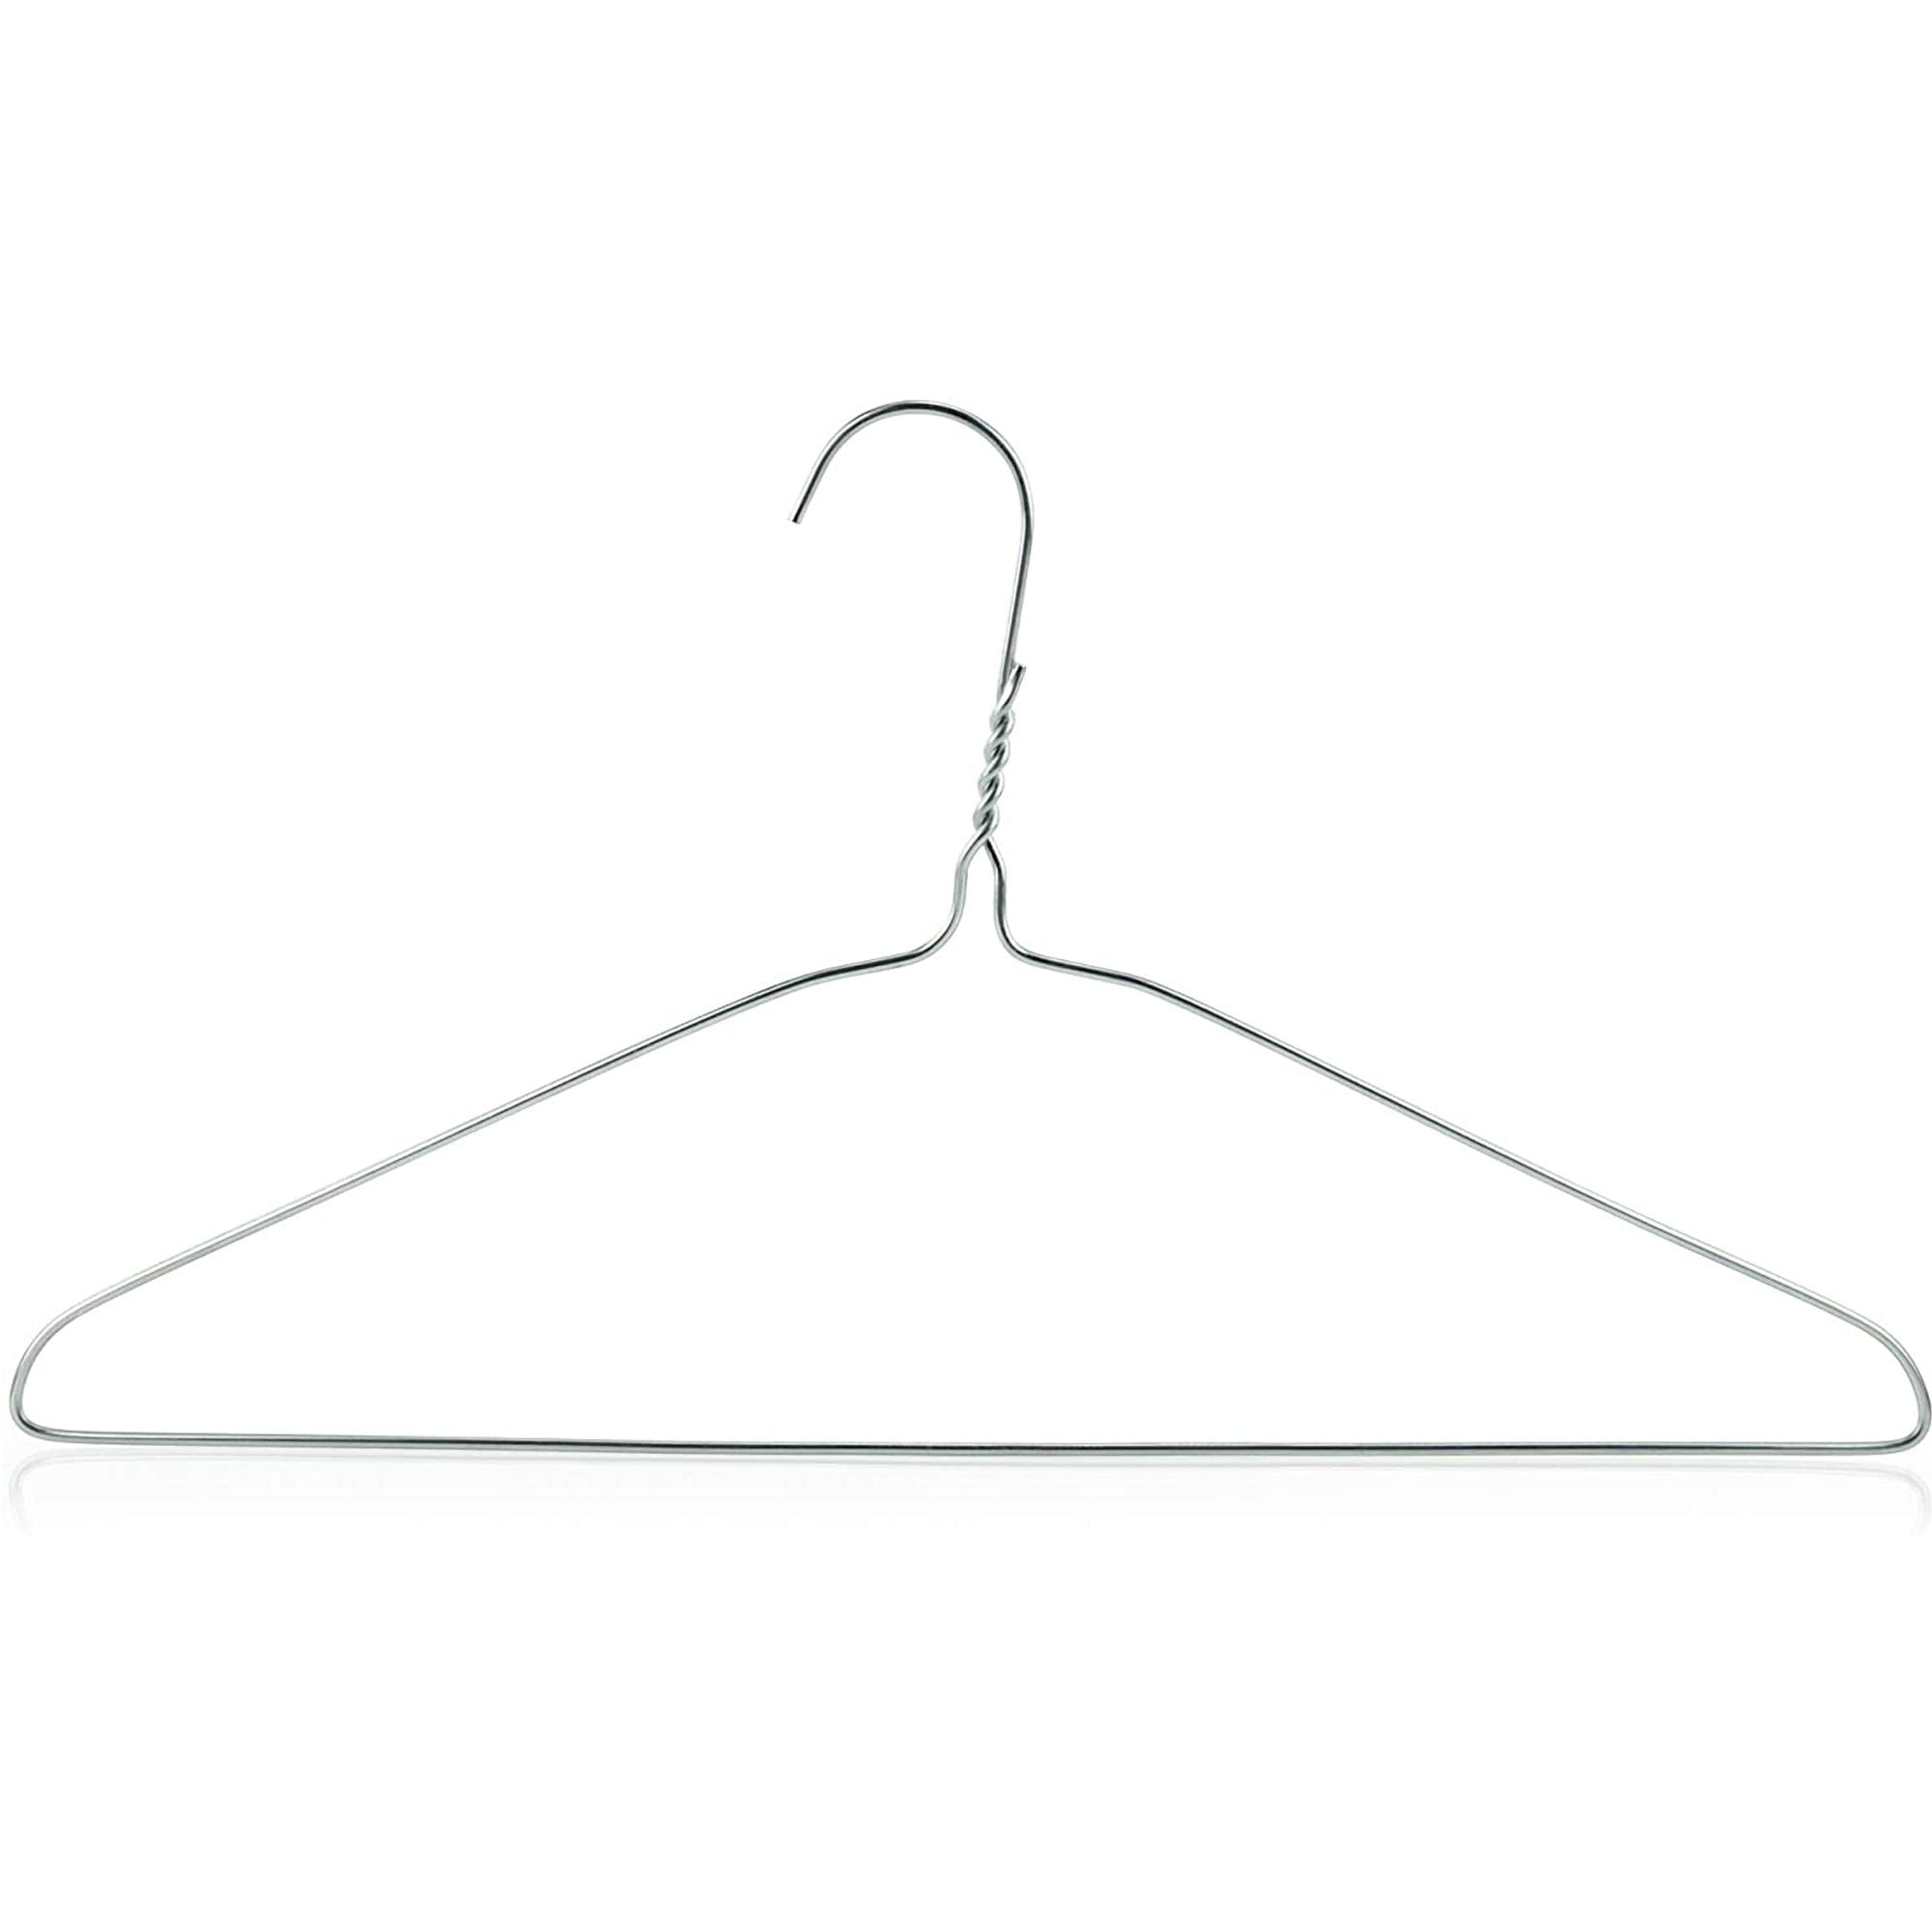 Wideskall 16 inch Metal Wire Clothing Hangers, 13 Gauge Wire, 120 Pack 